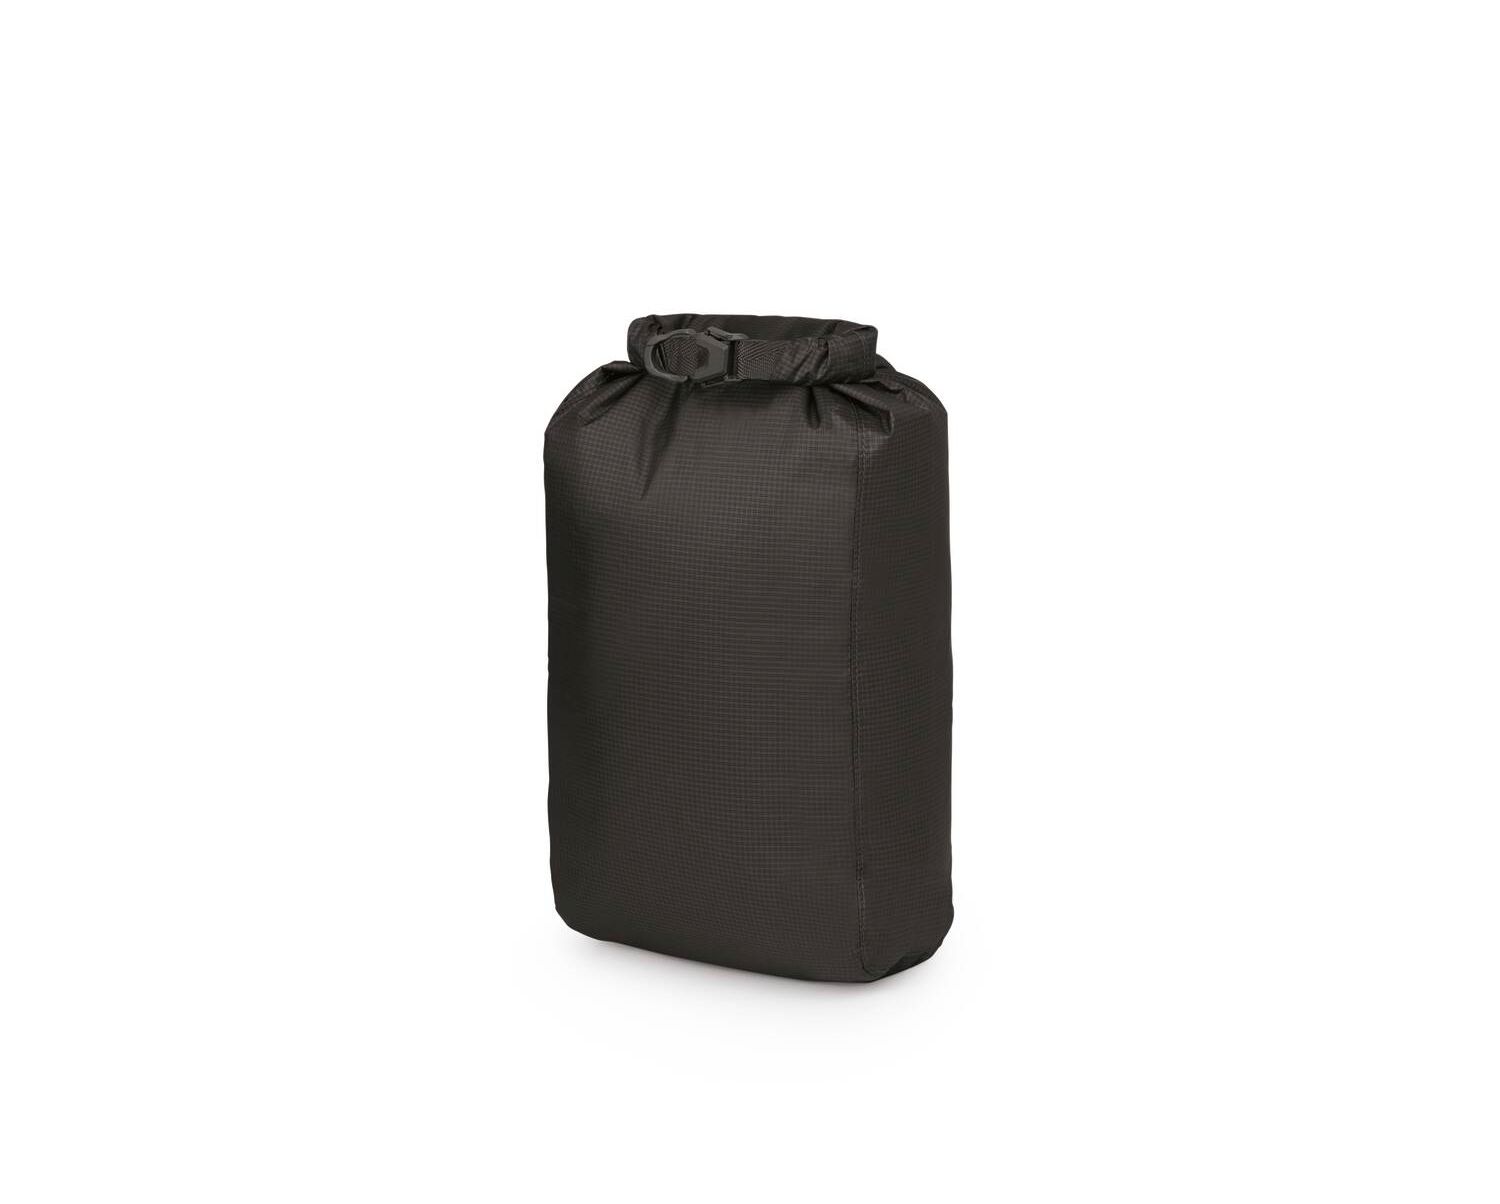 OSPREY Ultralight Dry Sack 6 Black (10004941)